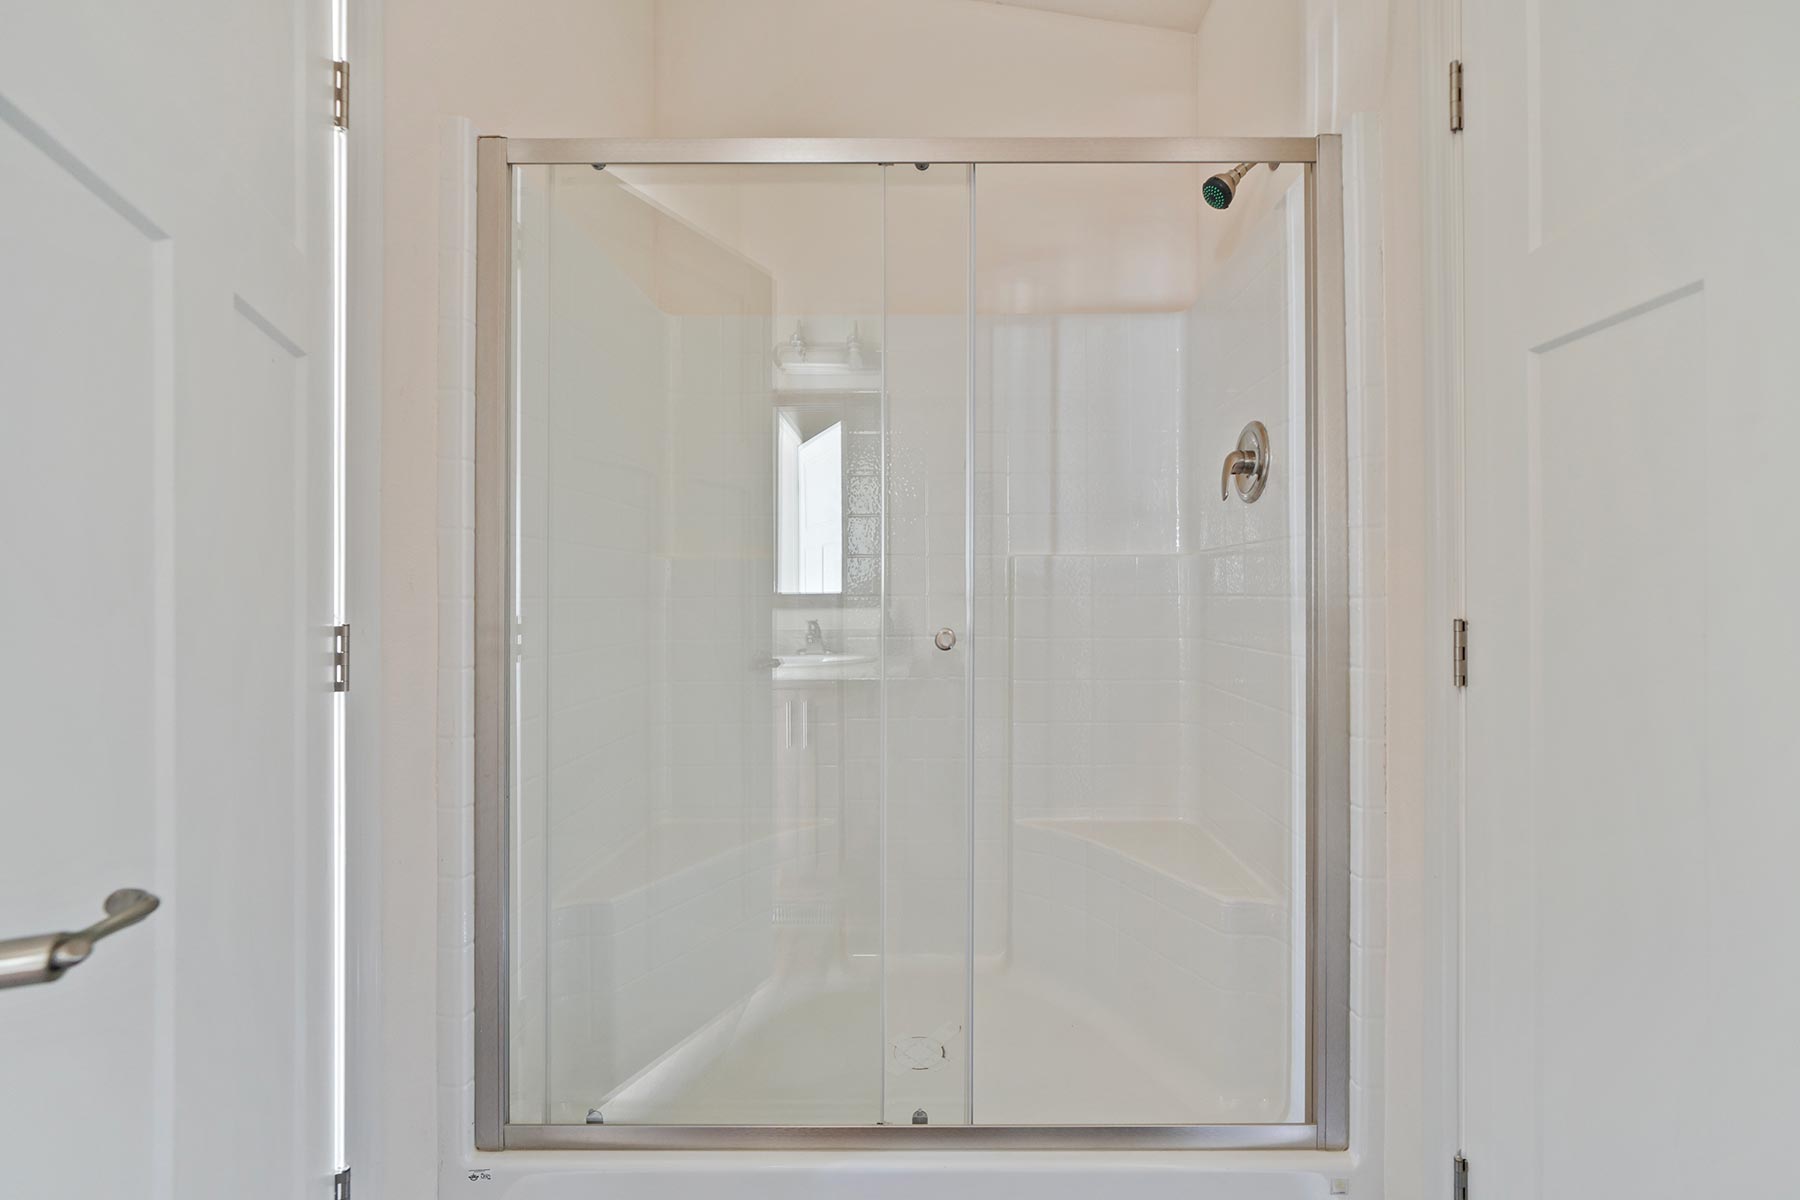 Skyline Homes Westridge 1227CT Manufactured Home Second bathroom shower